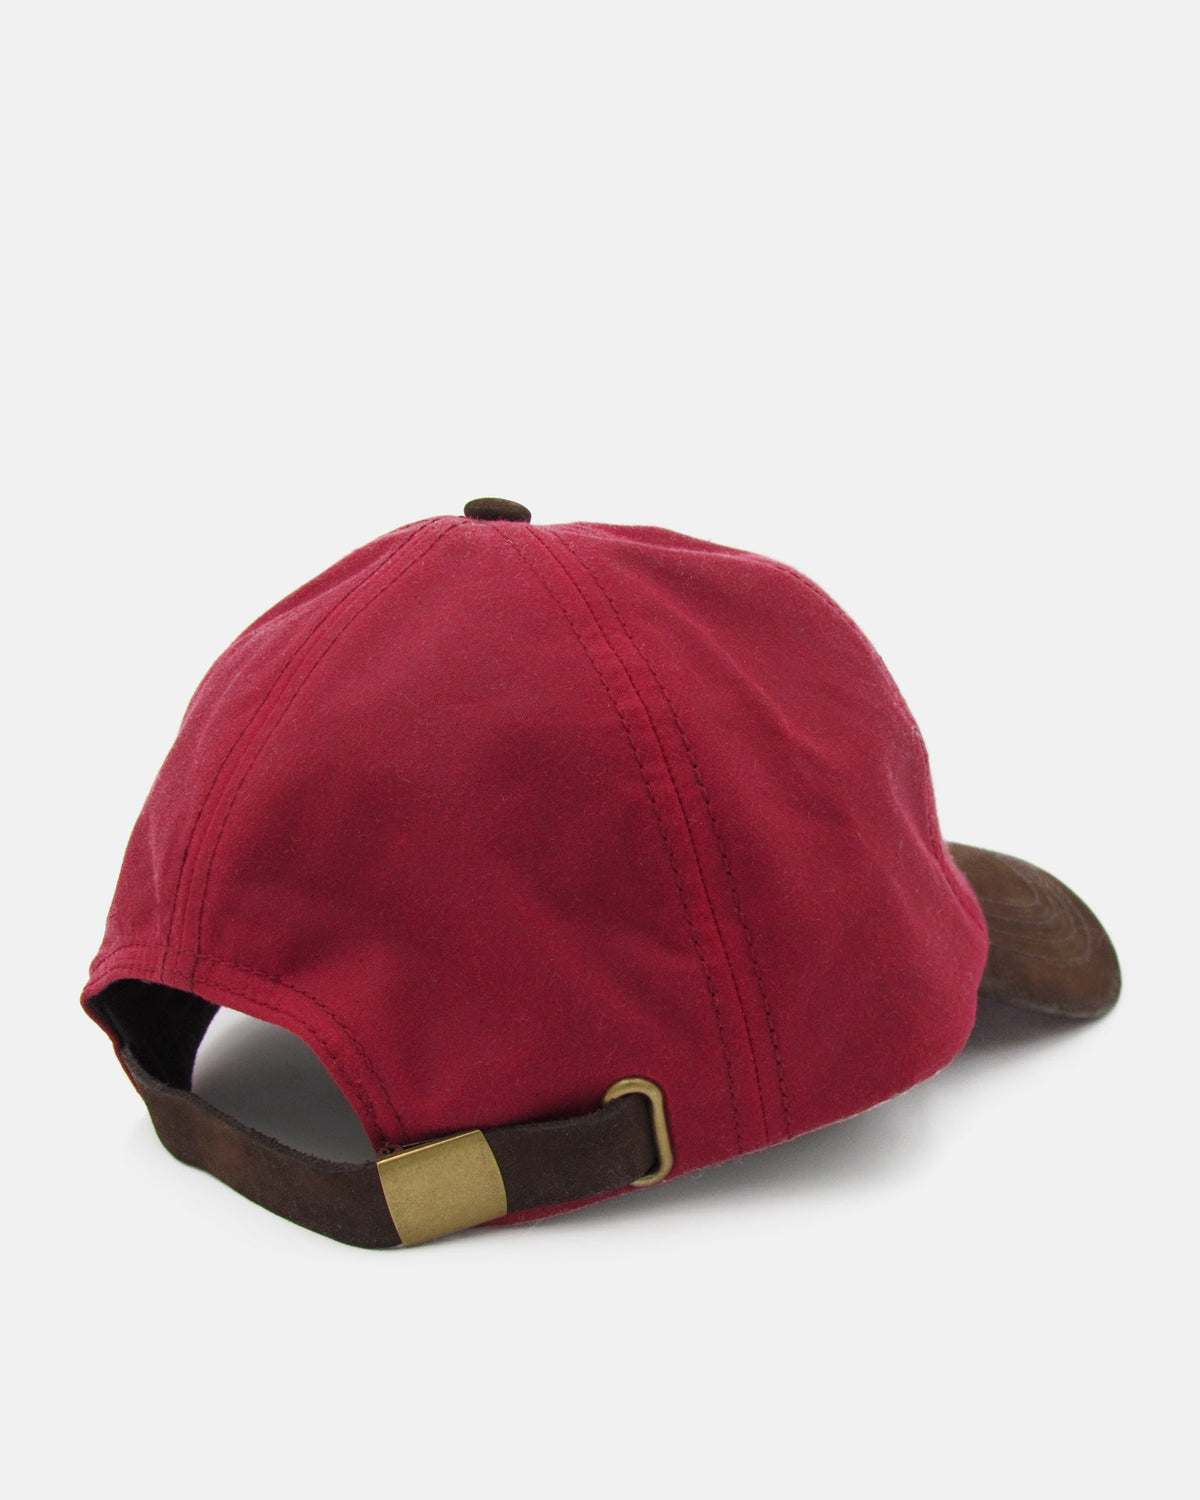 Wax Baseball Cap - Red - BRIT LOCKER